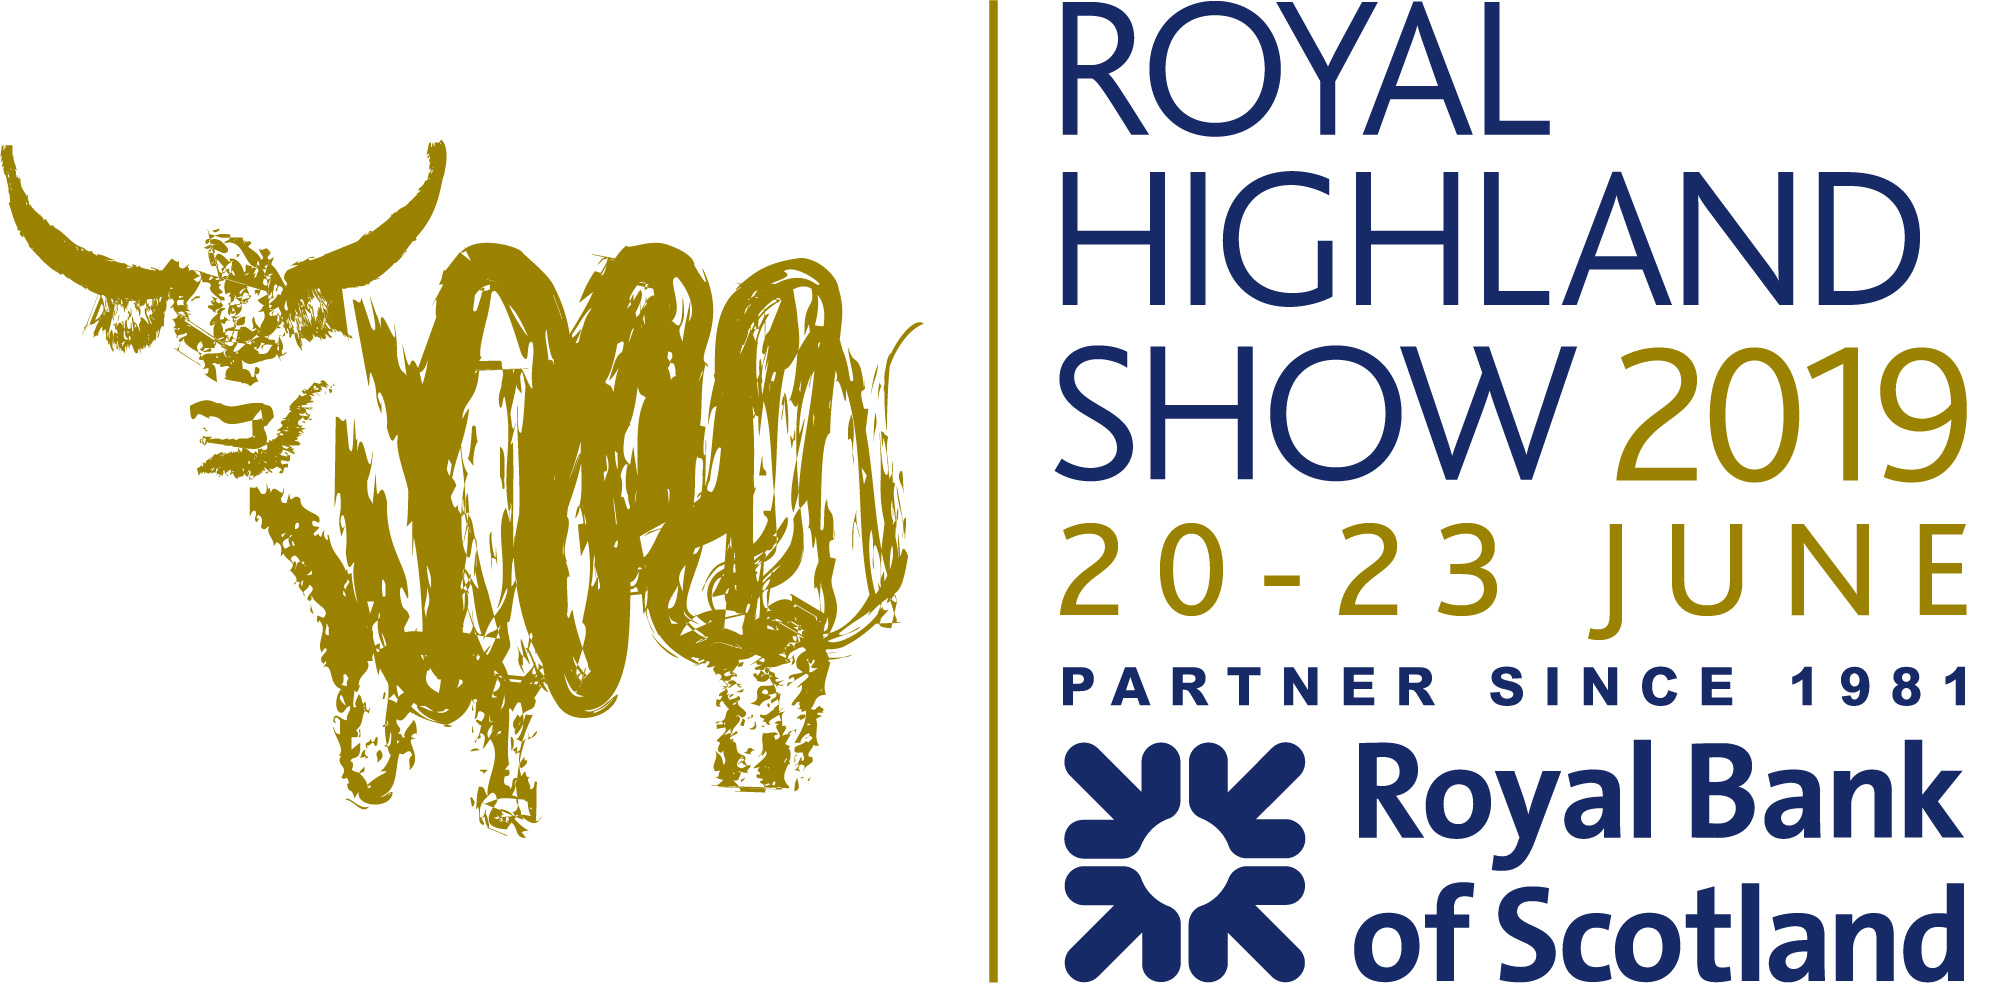 Royal Highland show 2019